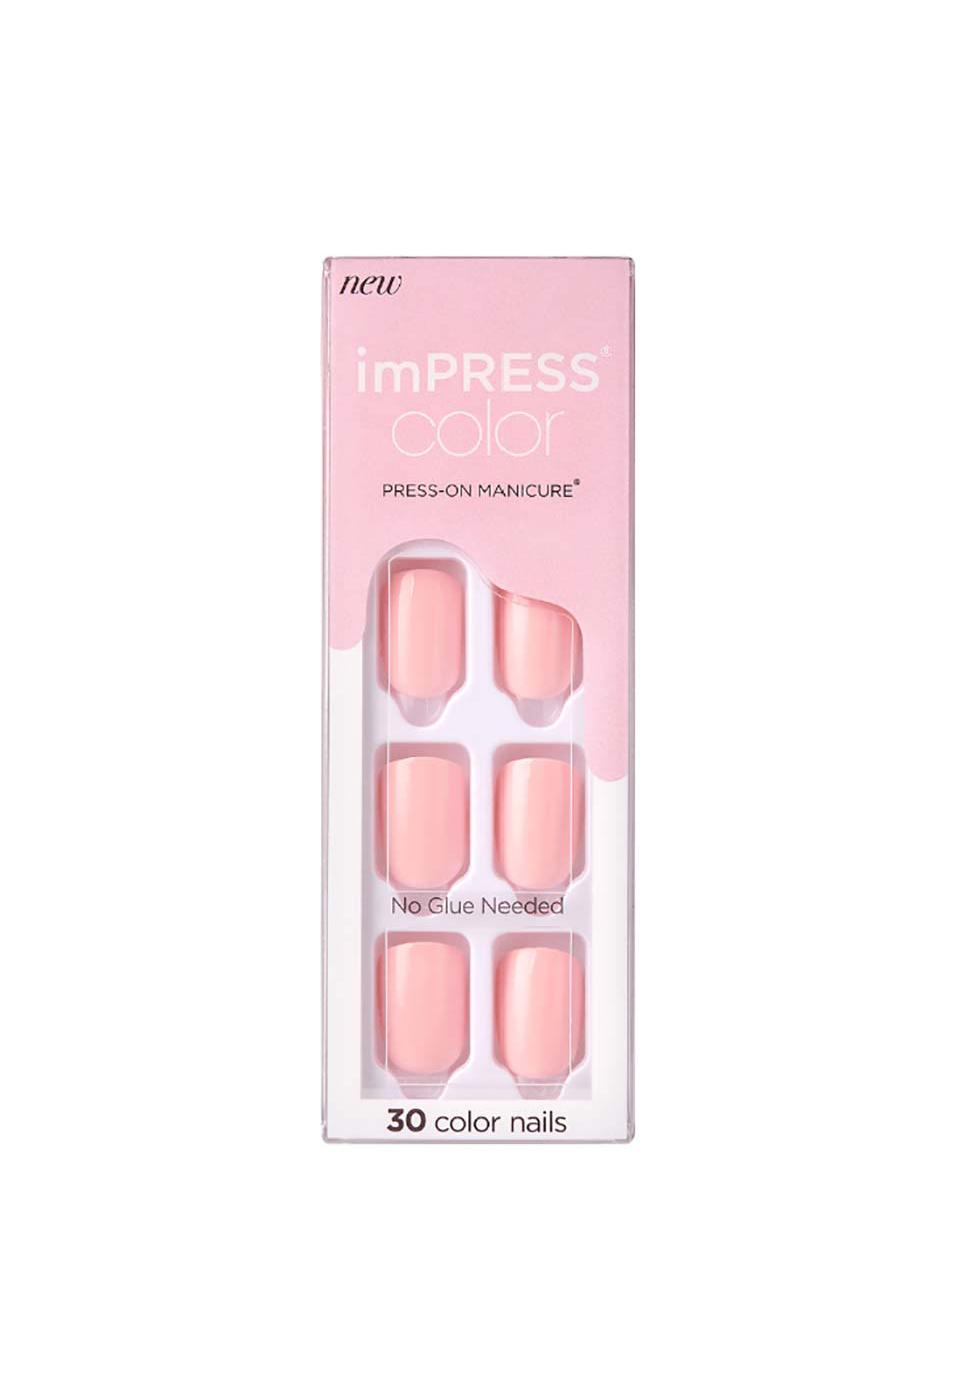 KISS imPRESS Color Press-On Manicure Pick Me Pink; image 1 of 2